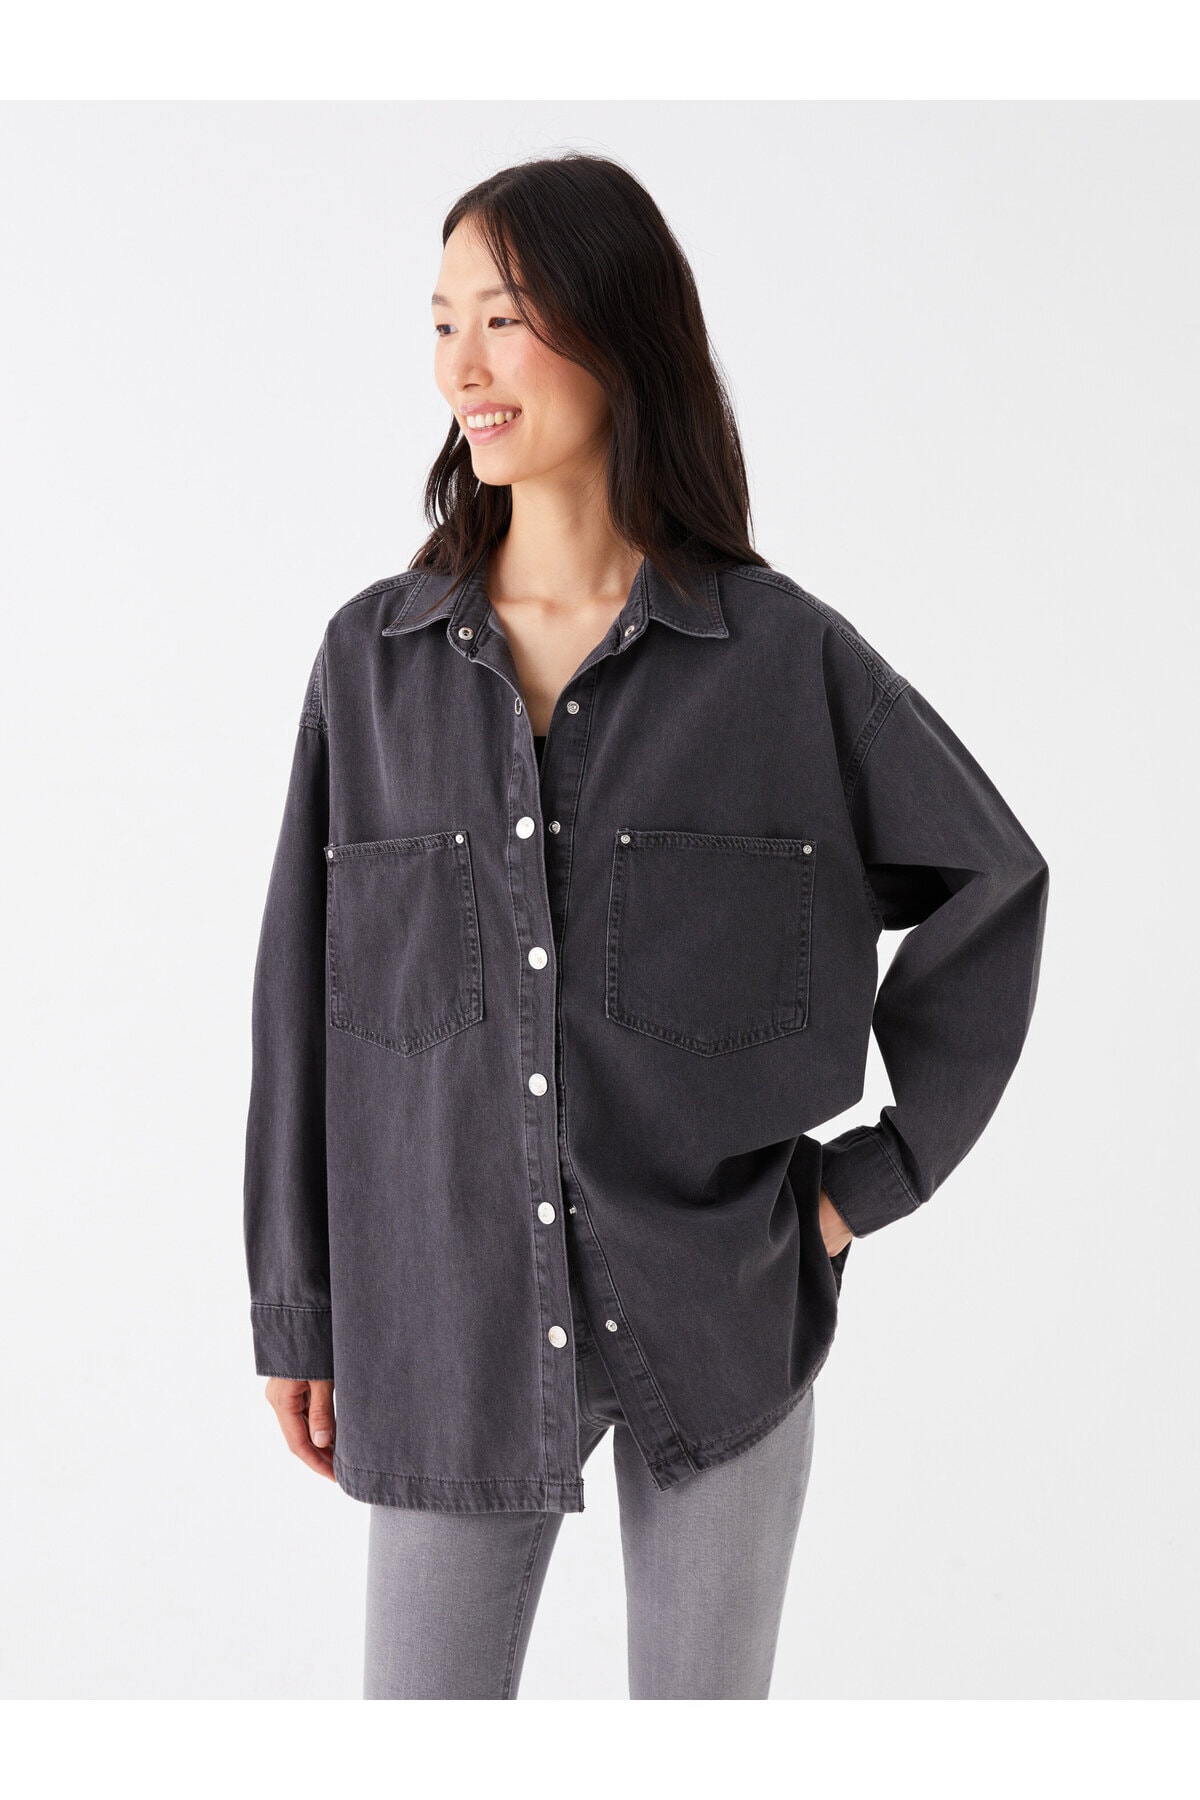 Рубашка - Серая - Oversize LC Waikiki, серый рубашка серая oversize trendyol серый